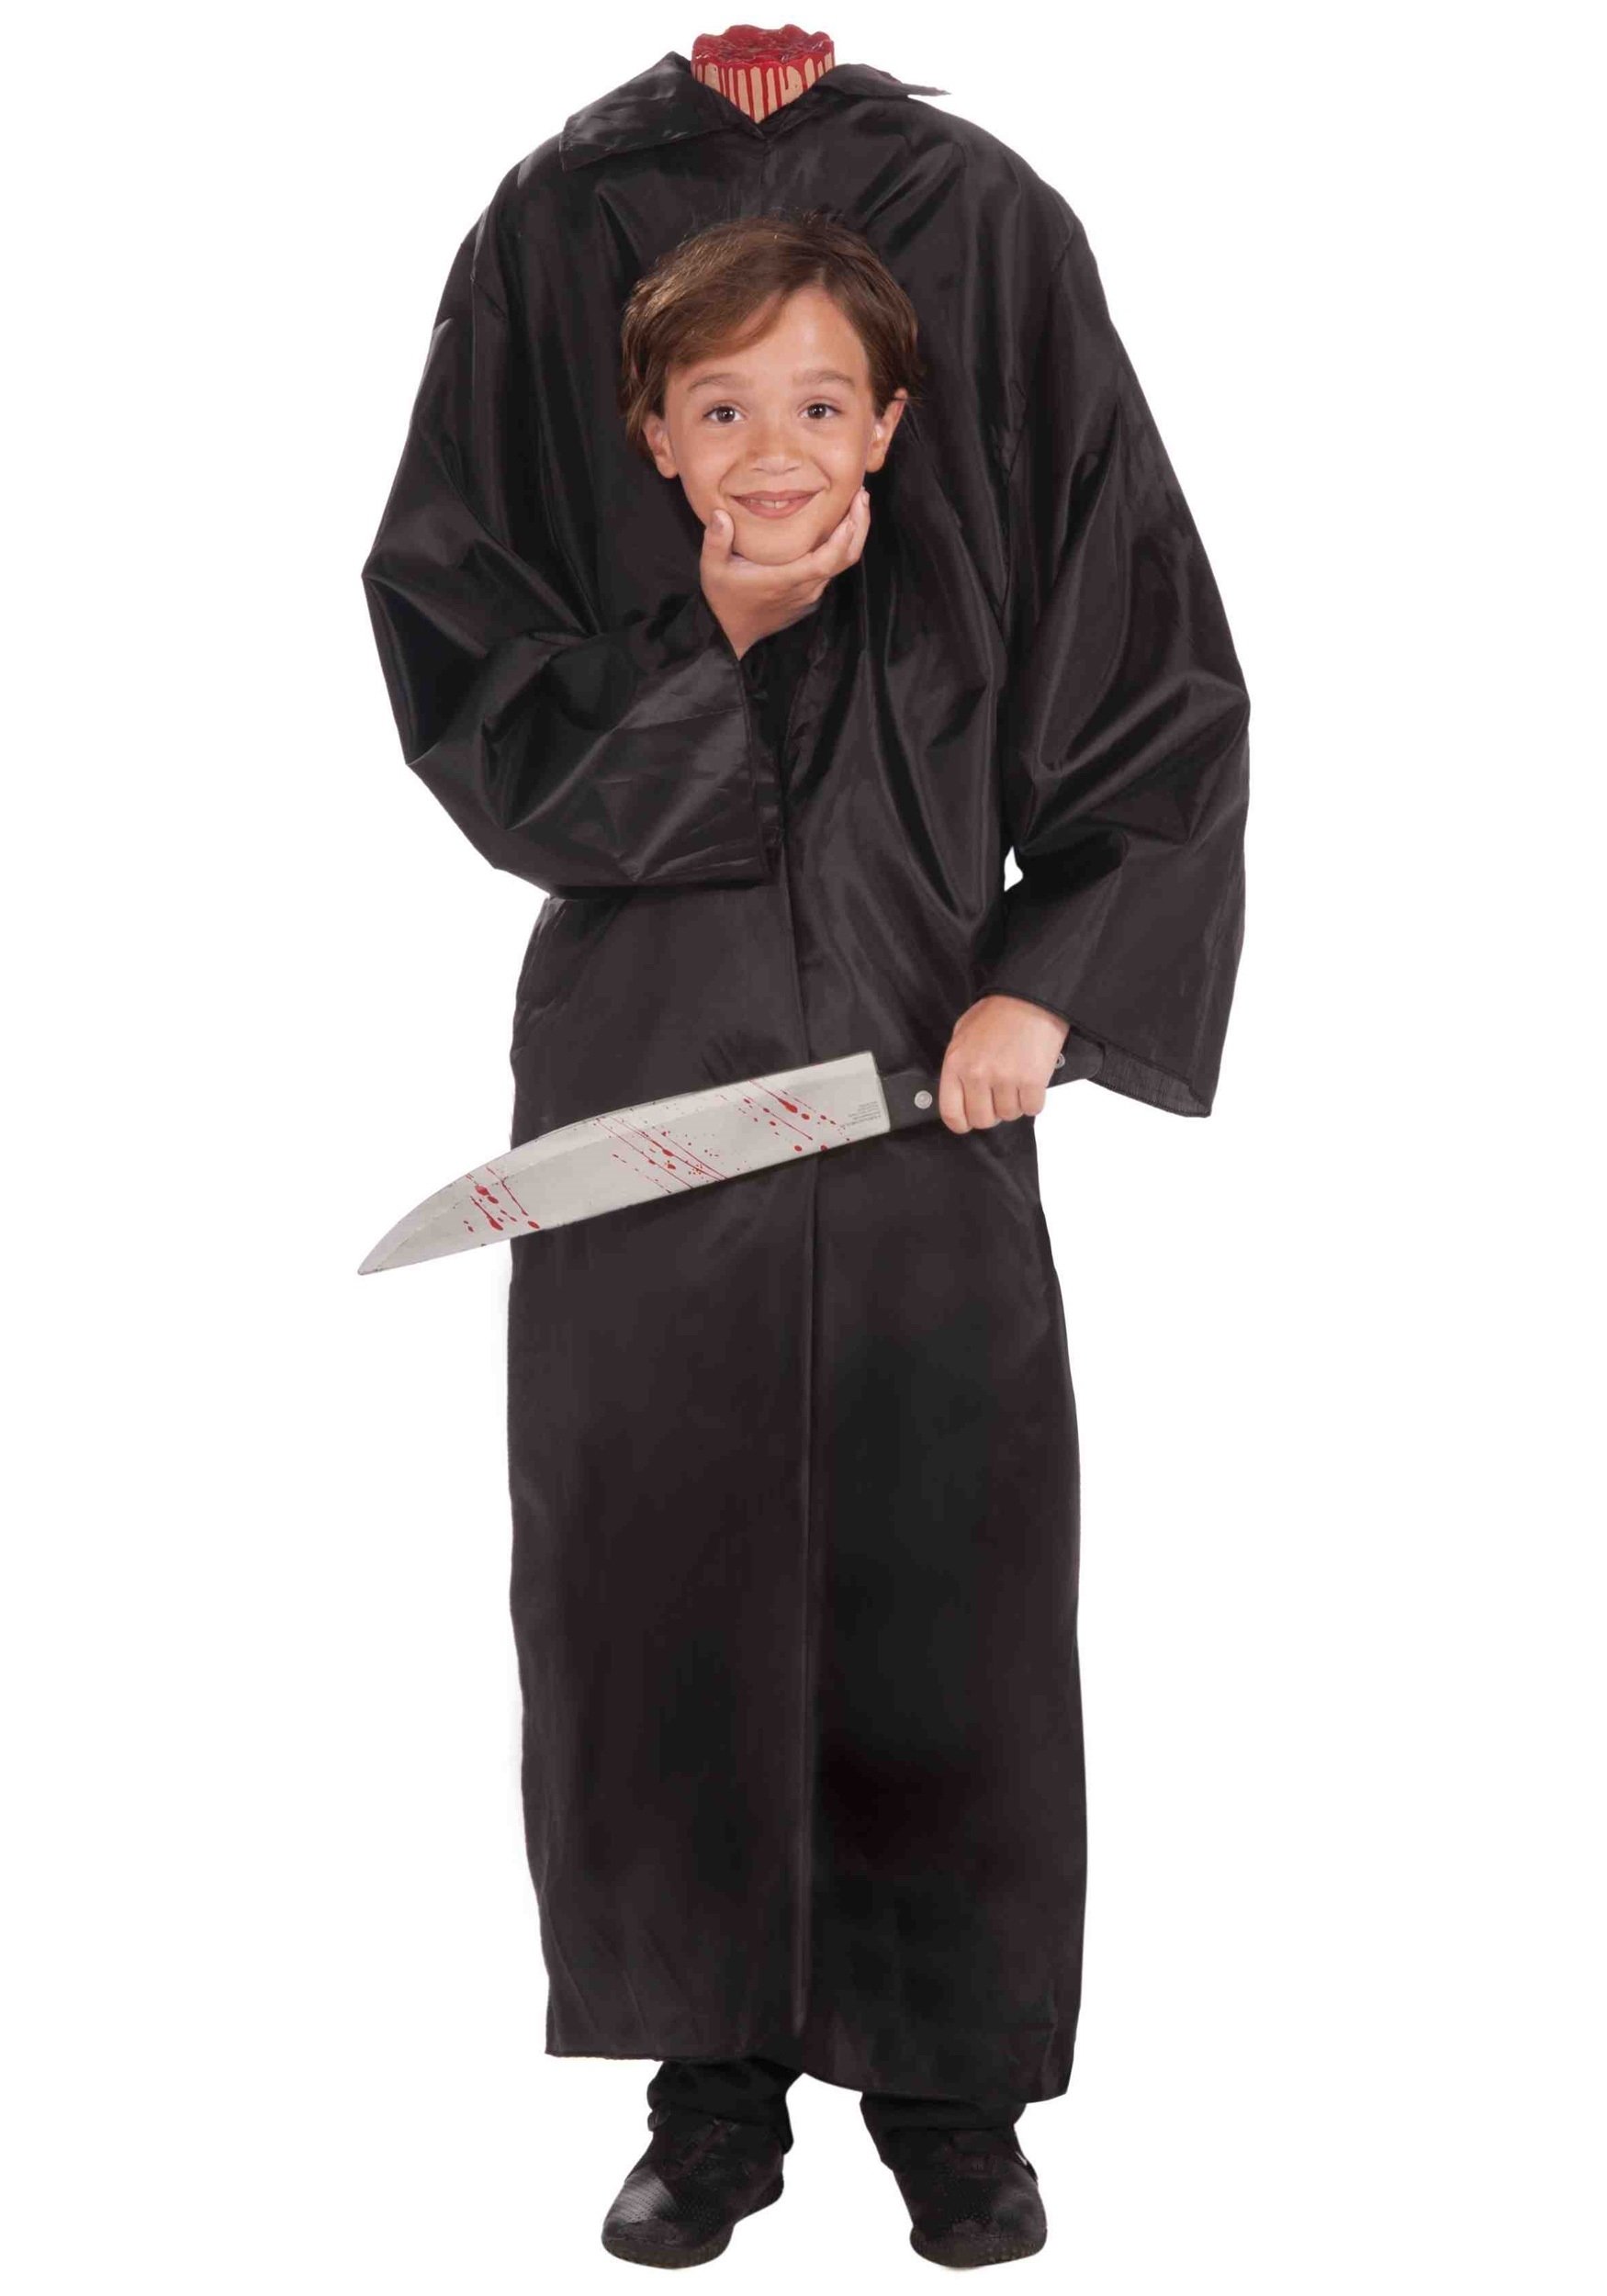 10 Great Halloween Costumes Ideas For Boys child headless boy costume 2022